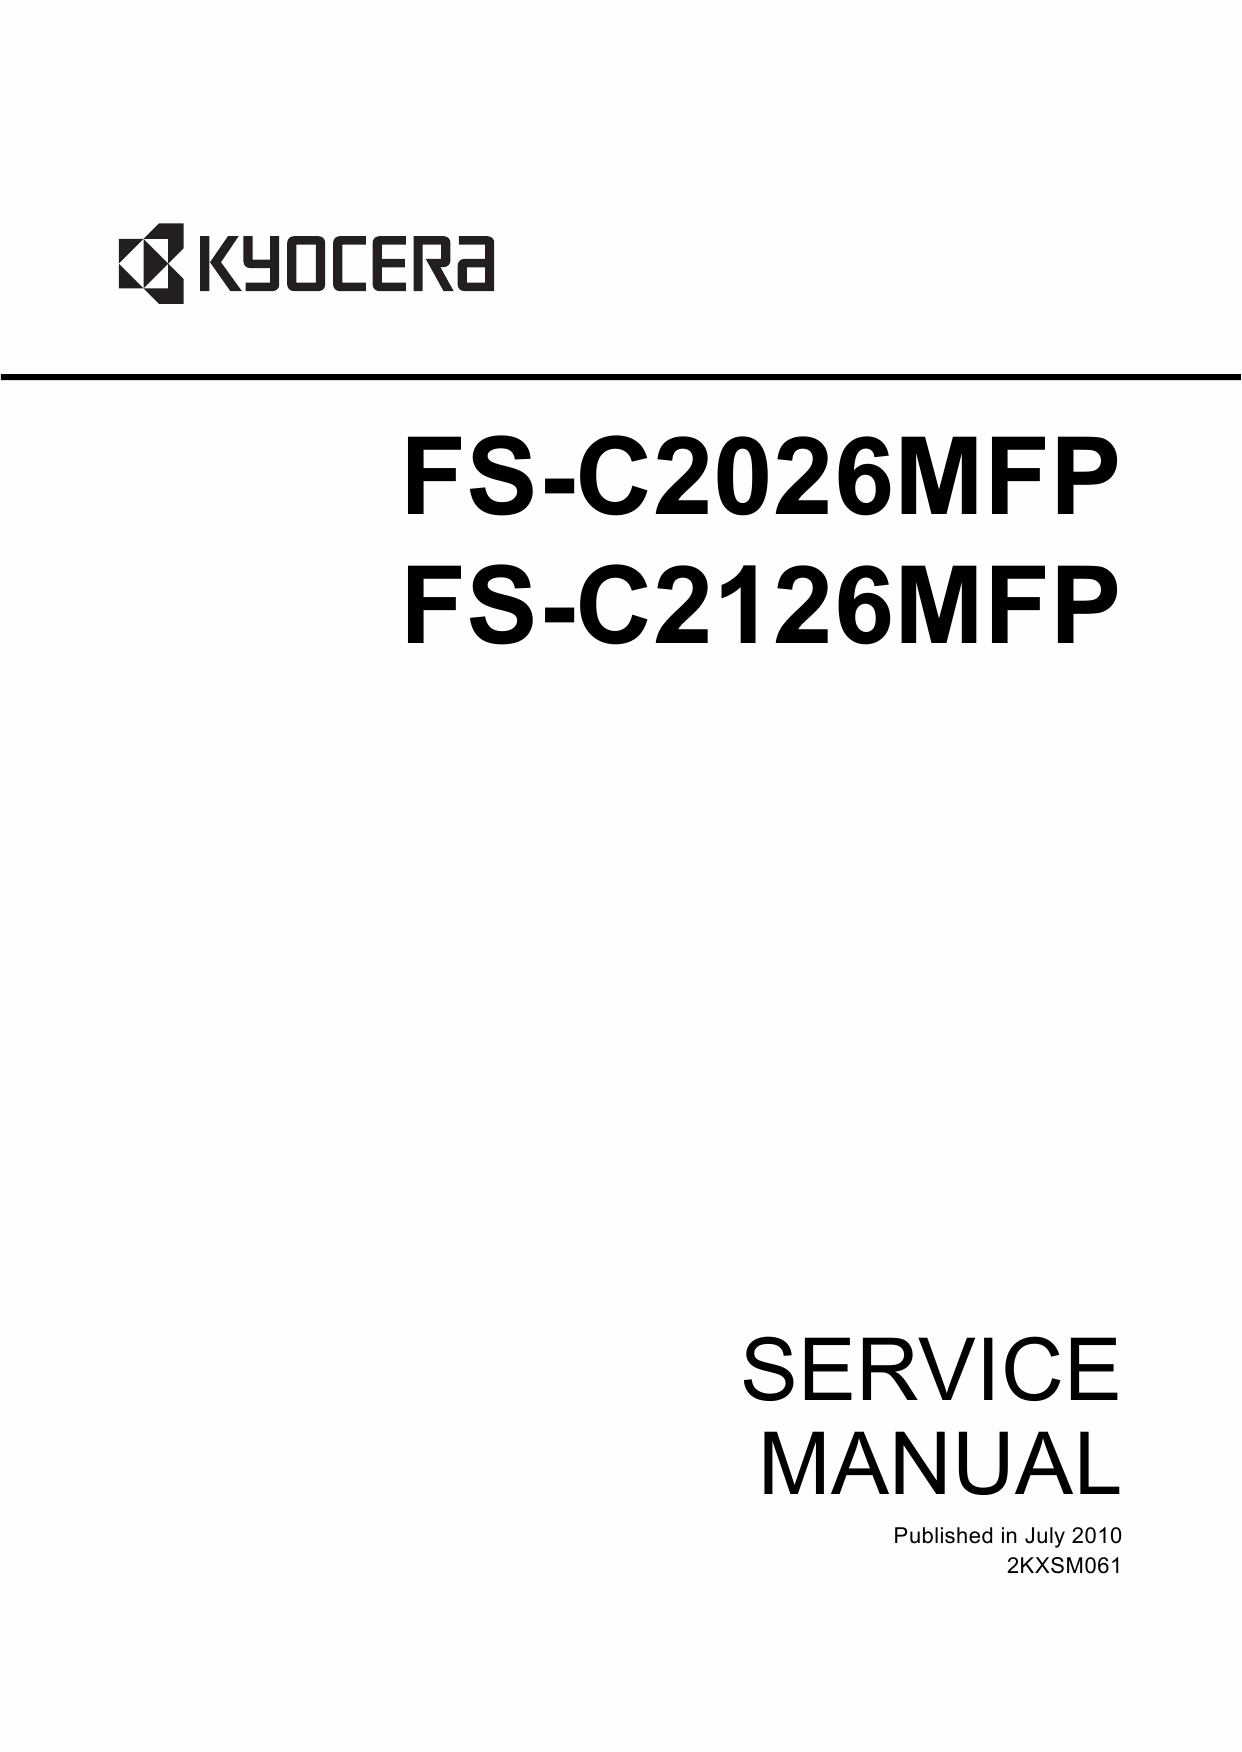 KYOCERA ColorMFP FS-C2026MFP C2126MFP Parts and Service Manual-1